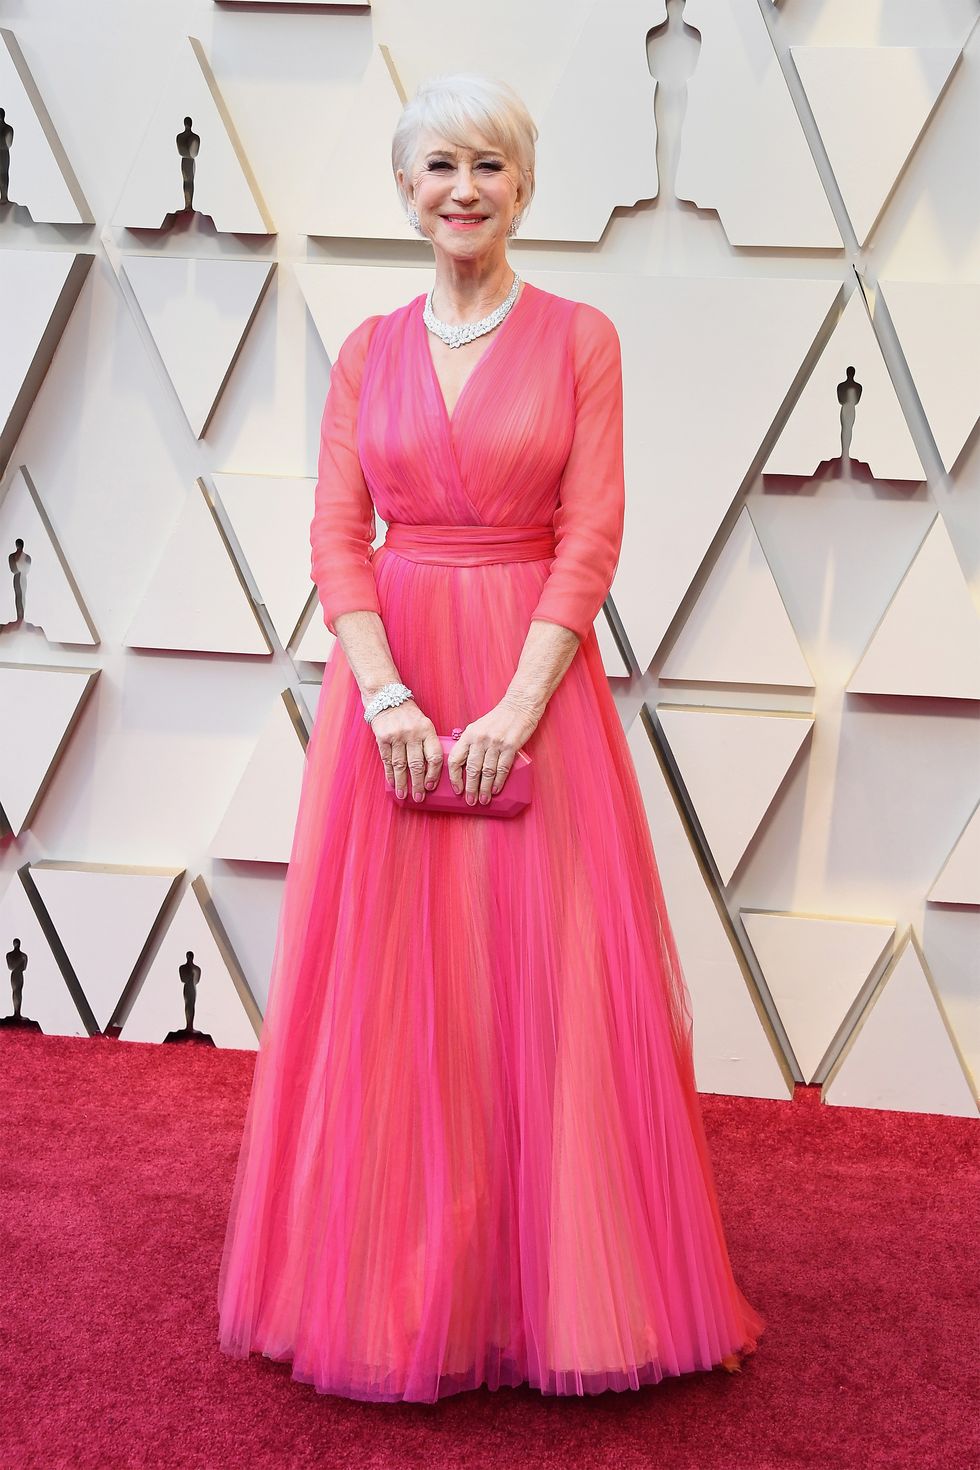 Helen Mirren Oscars 2019 Red carpet oscars, Red carpet dresses, Red